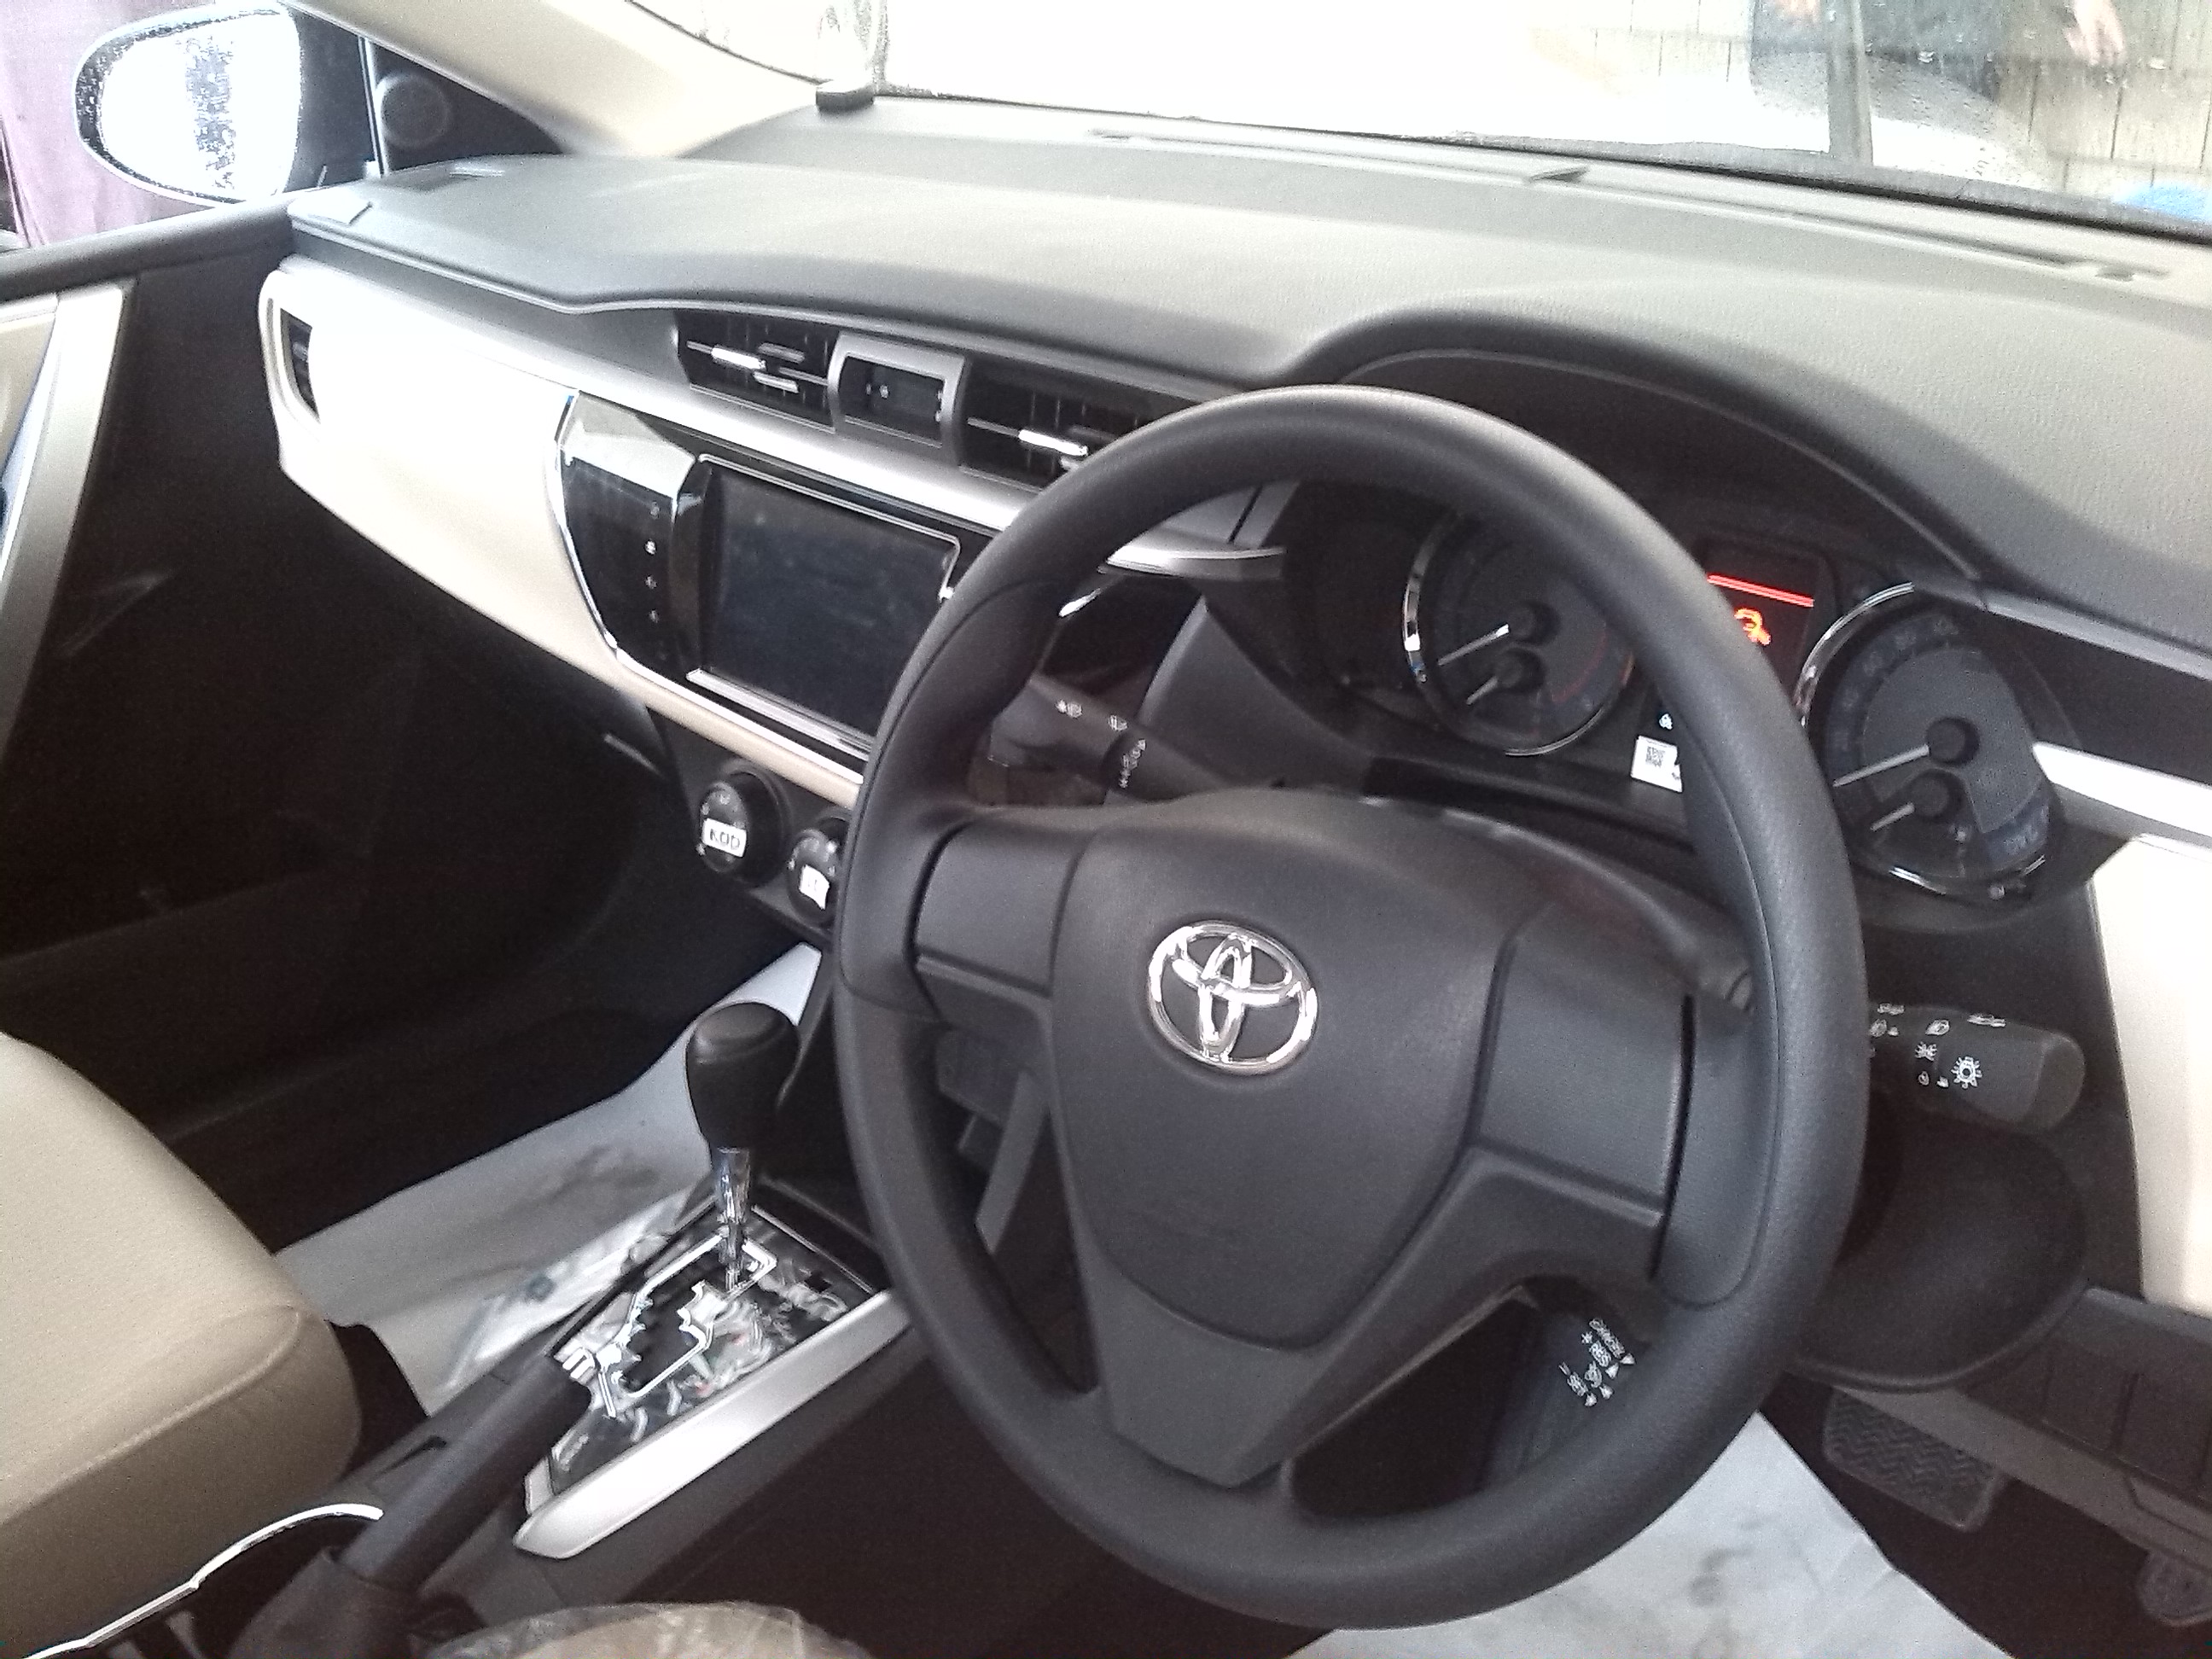 The New Toyota Corolla Xli Pakwheels Blog